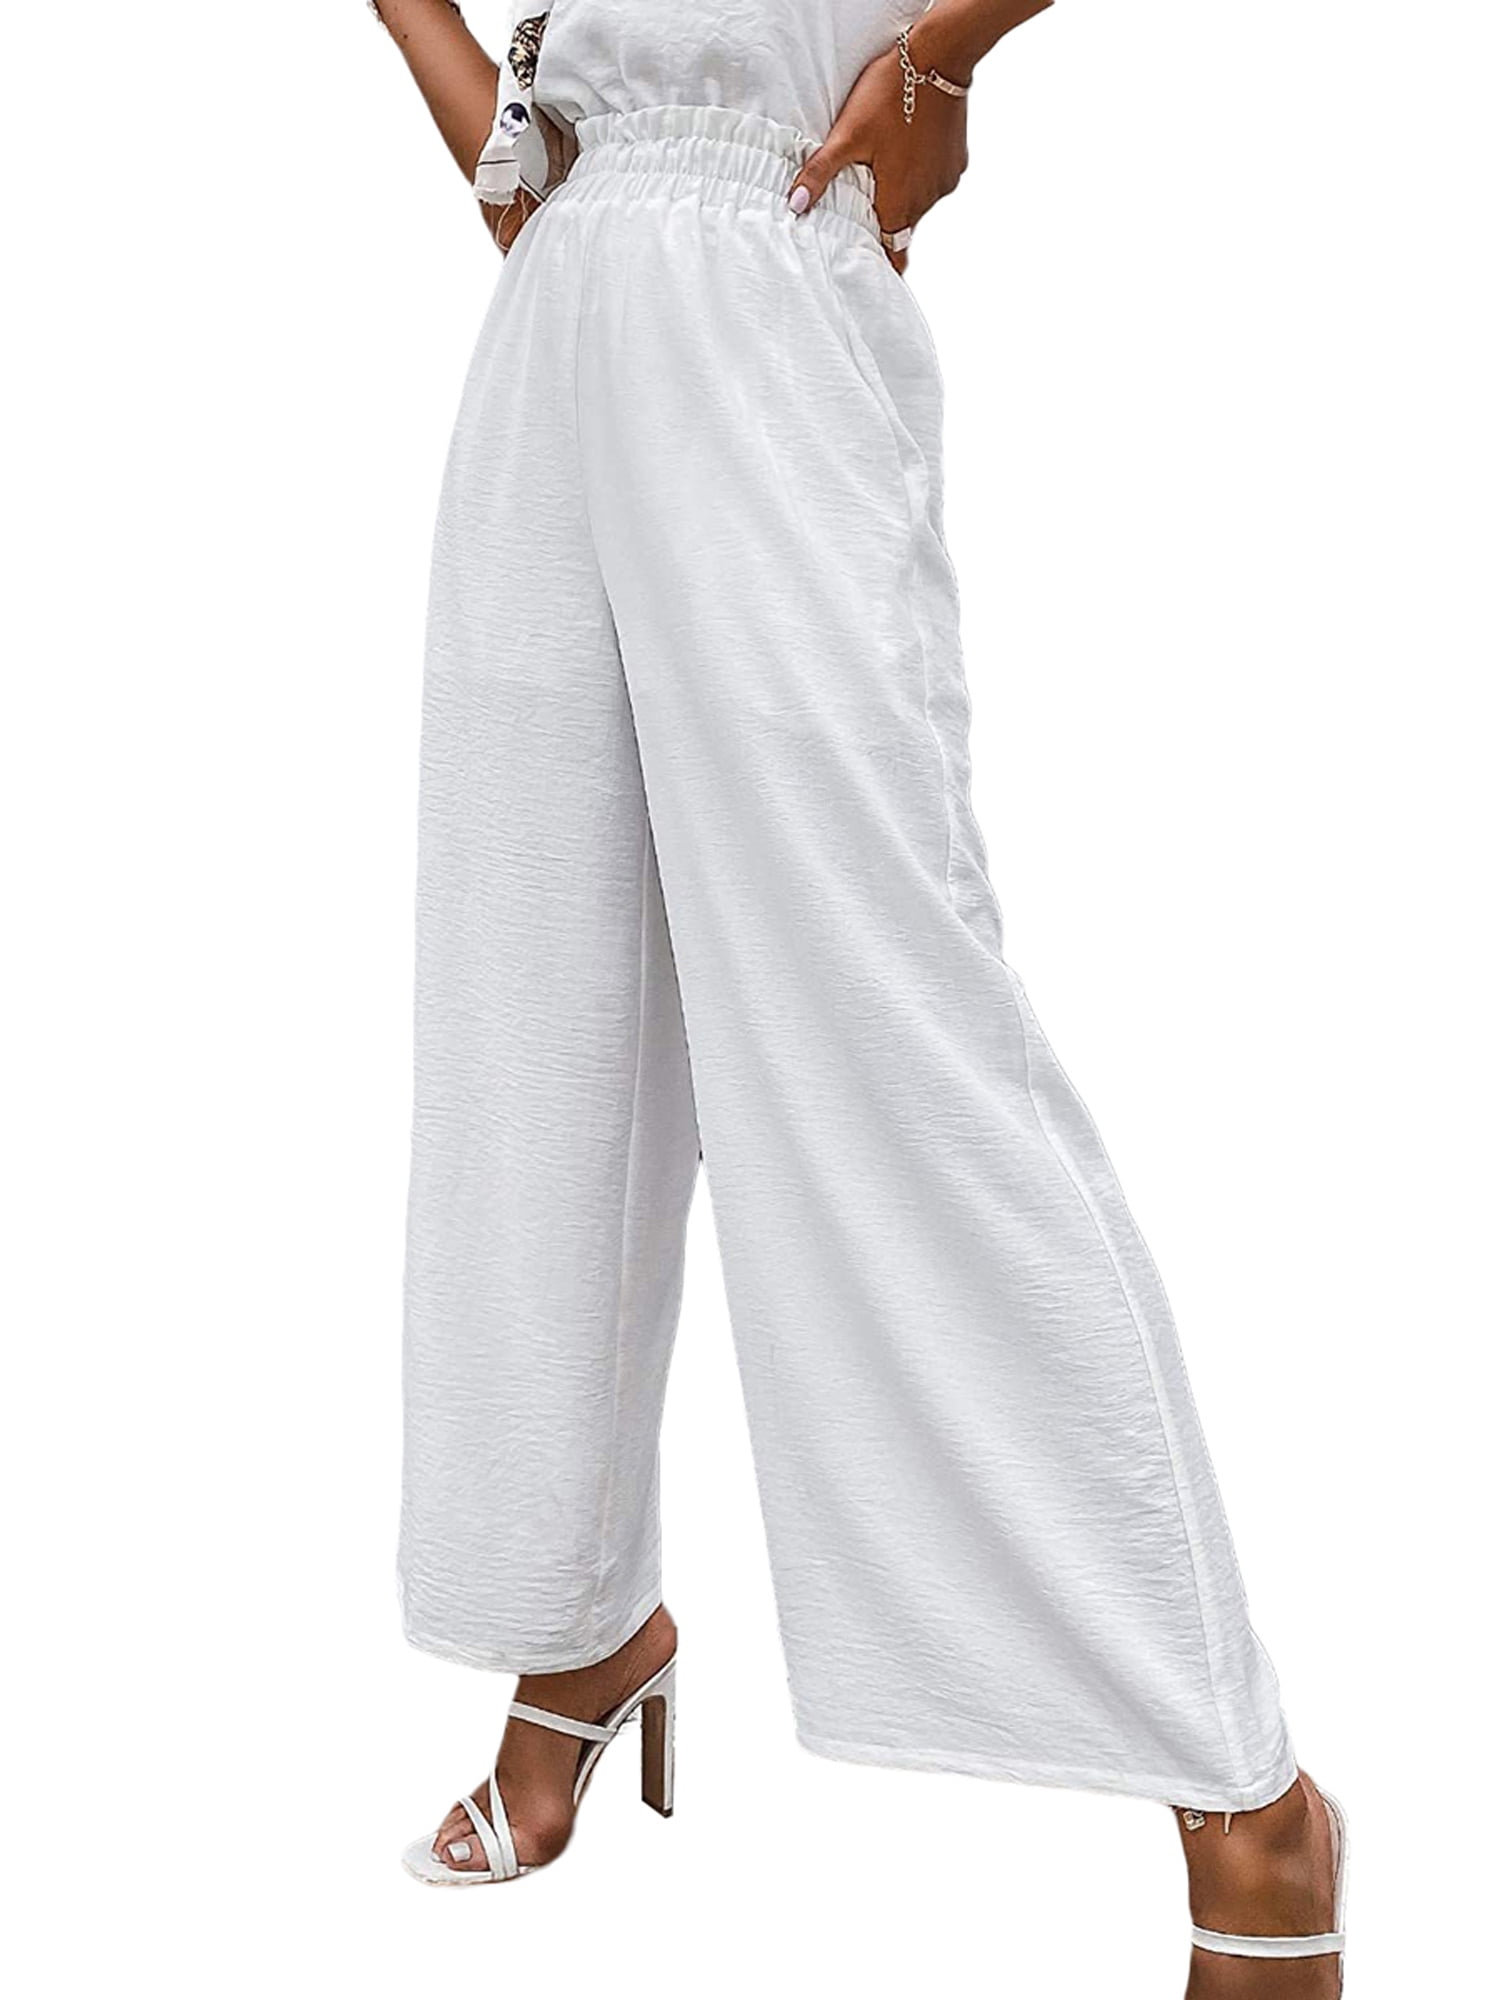 FAVIPT Straight Leg Cotton Linen Pants for Women Loose Fit Elastic Waist Pants with Pockets Casual Trousers Paper Bag Pants 